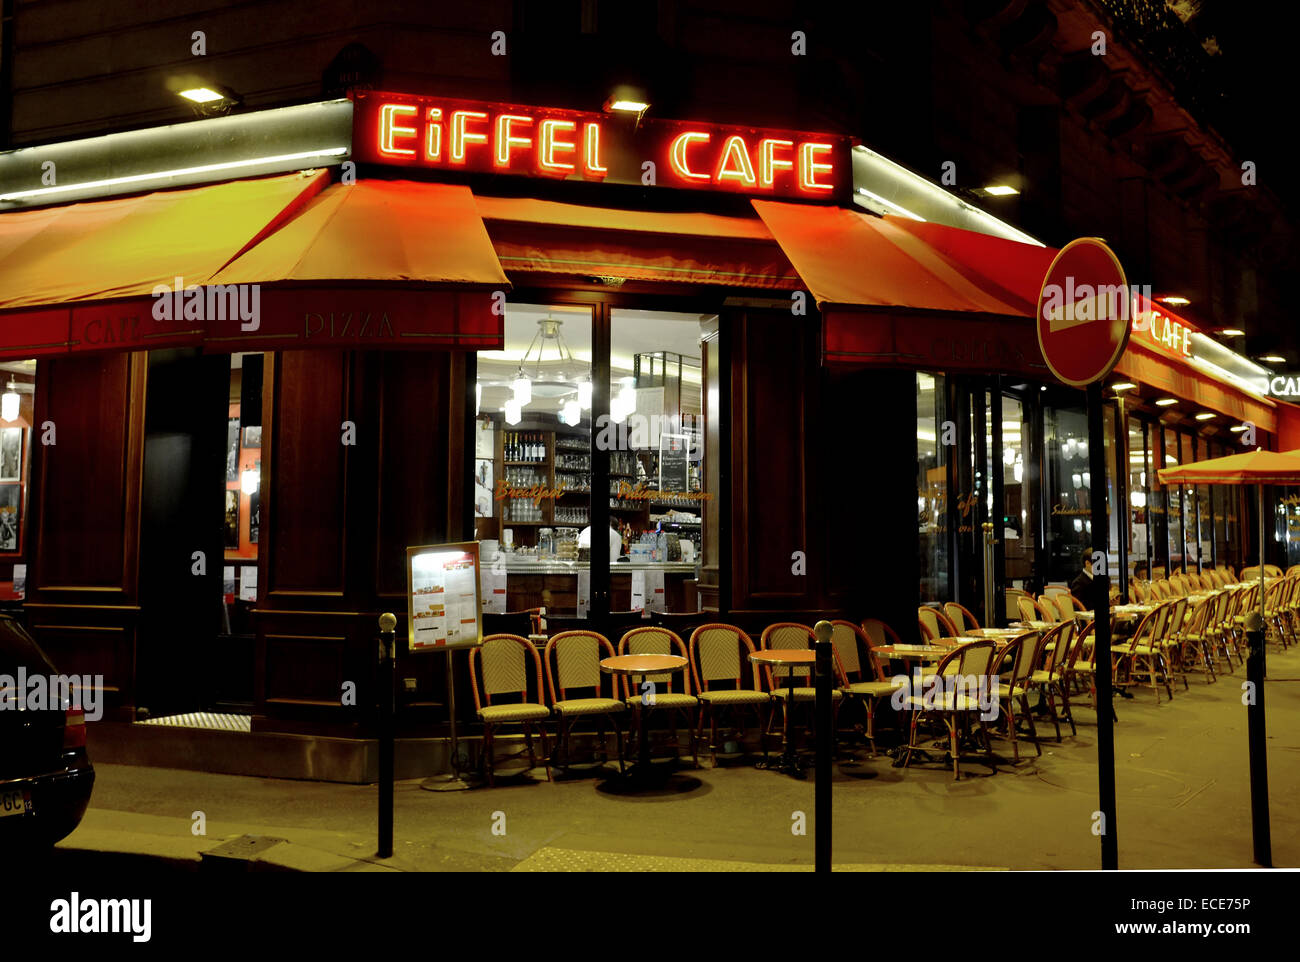 Eiffel Cafe, Paris bistro by night Stock Photo